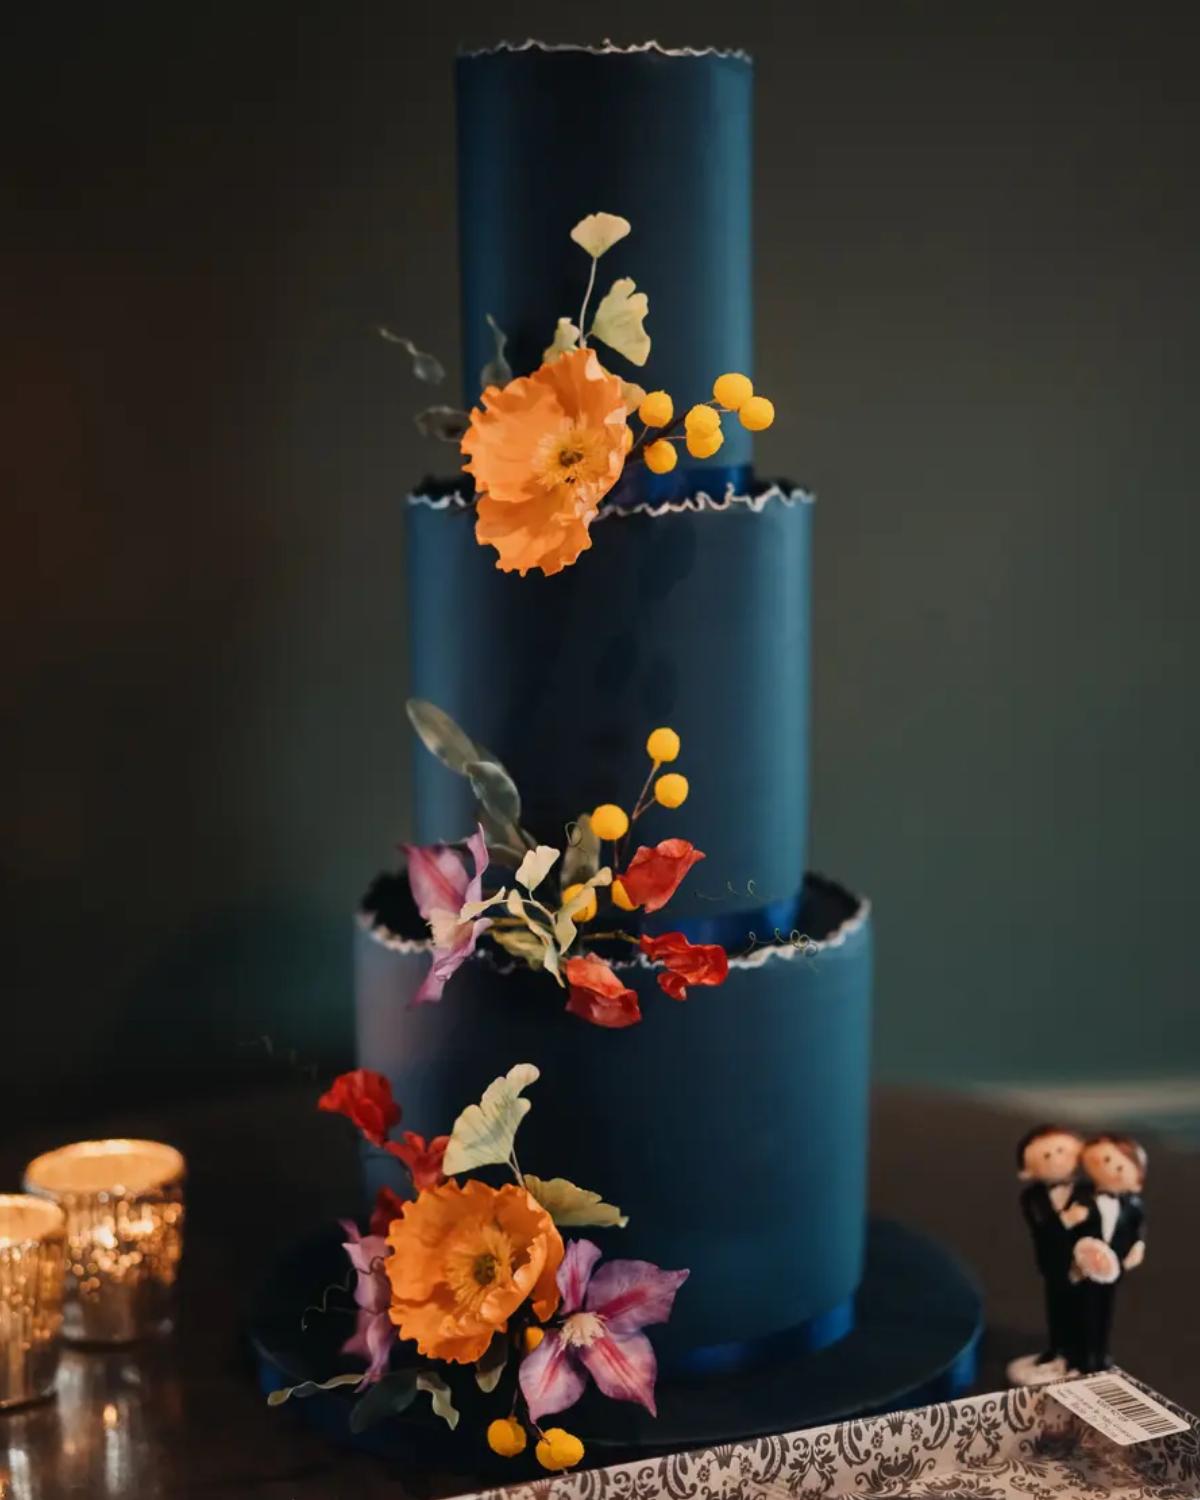 14 Of The Best Wedding Cakes Ever! - Steve Gerrard Photography